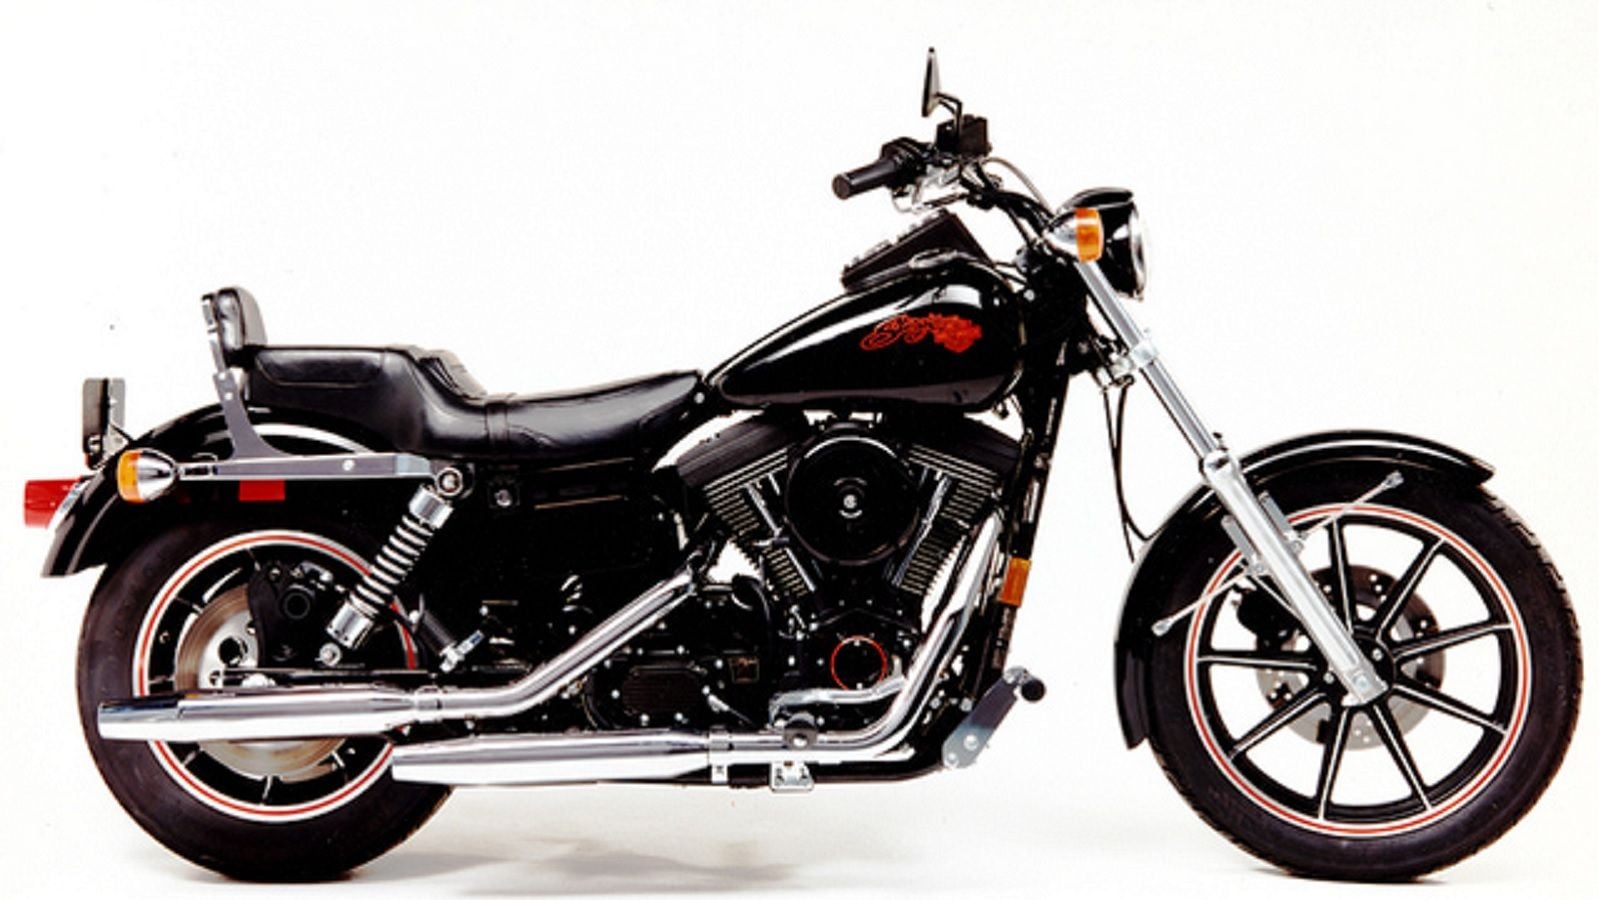 Harley-Davidson Dyna: A History of Performance and Innovation